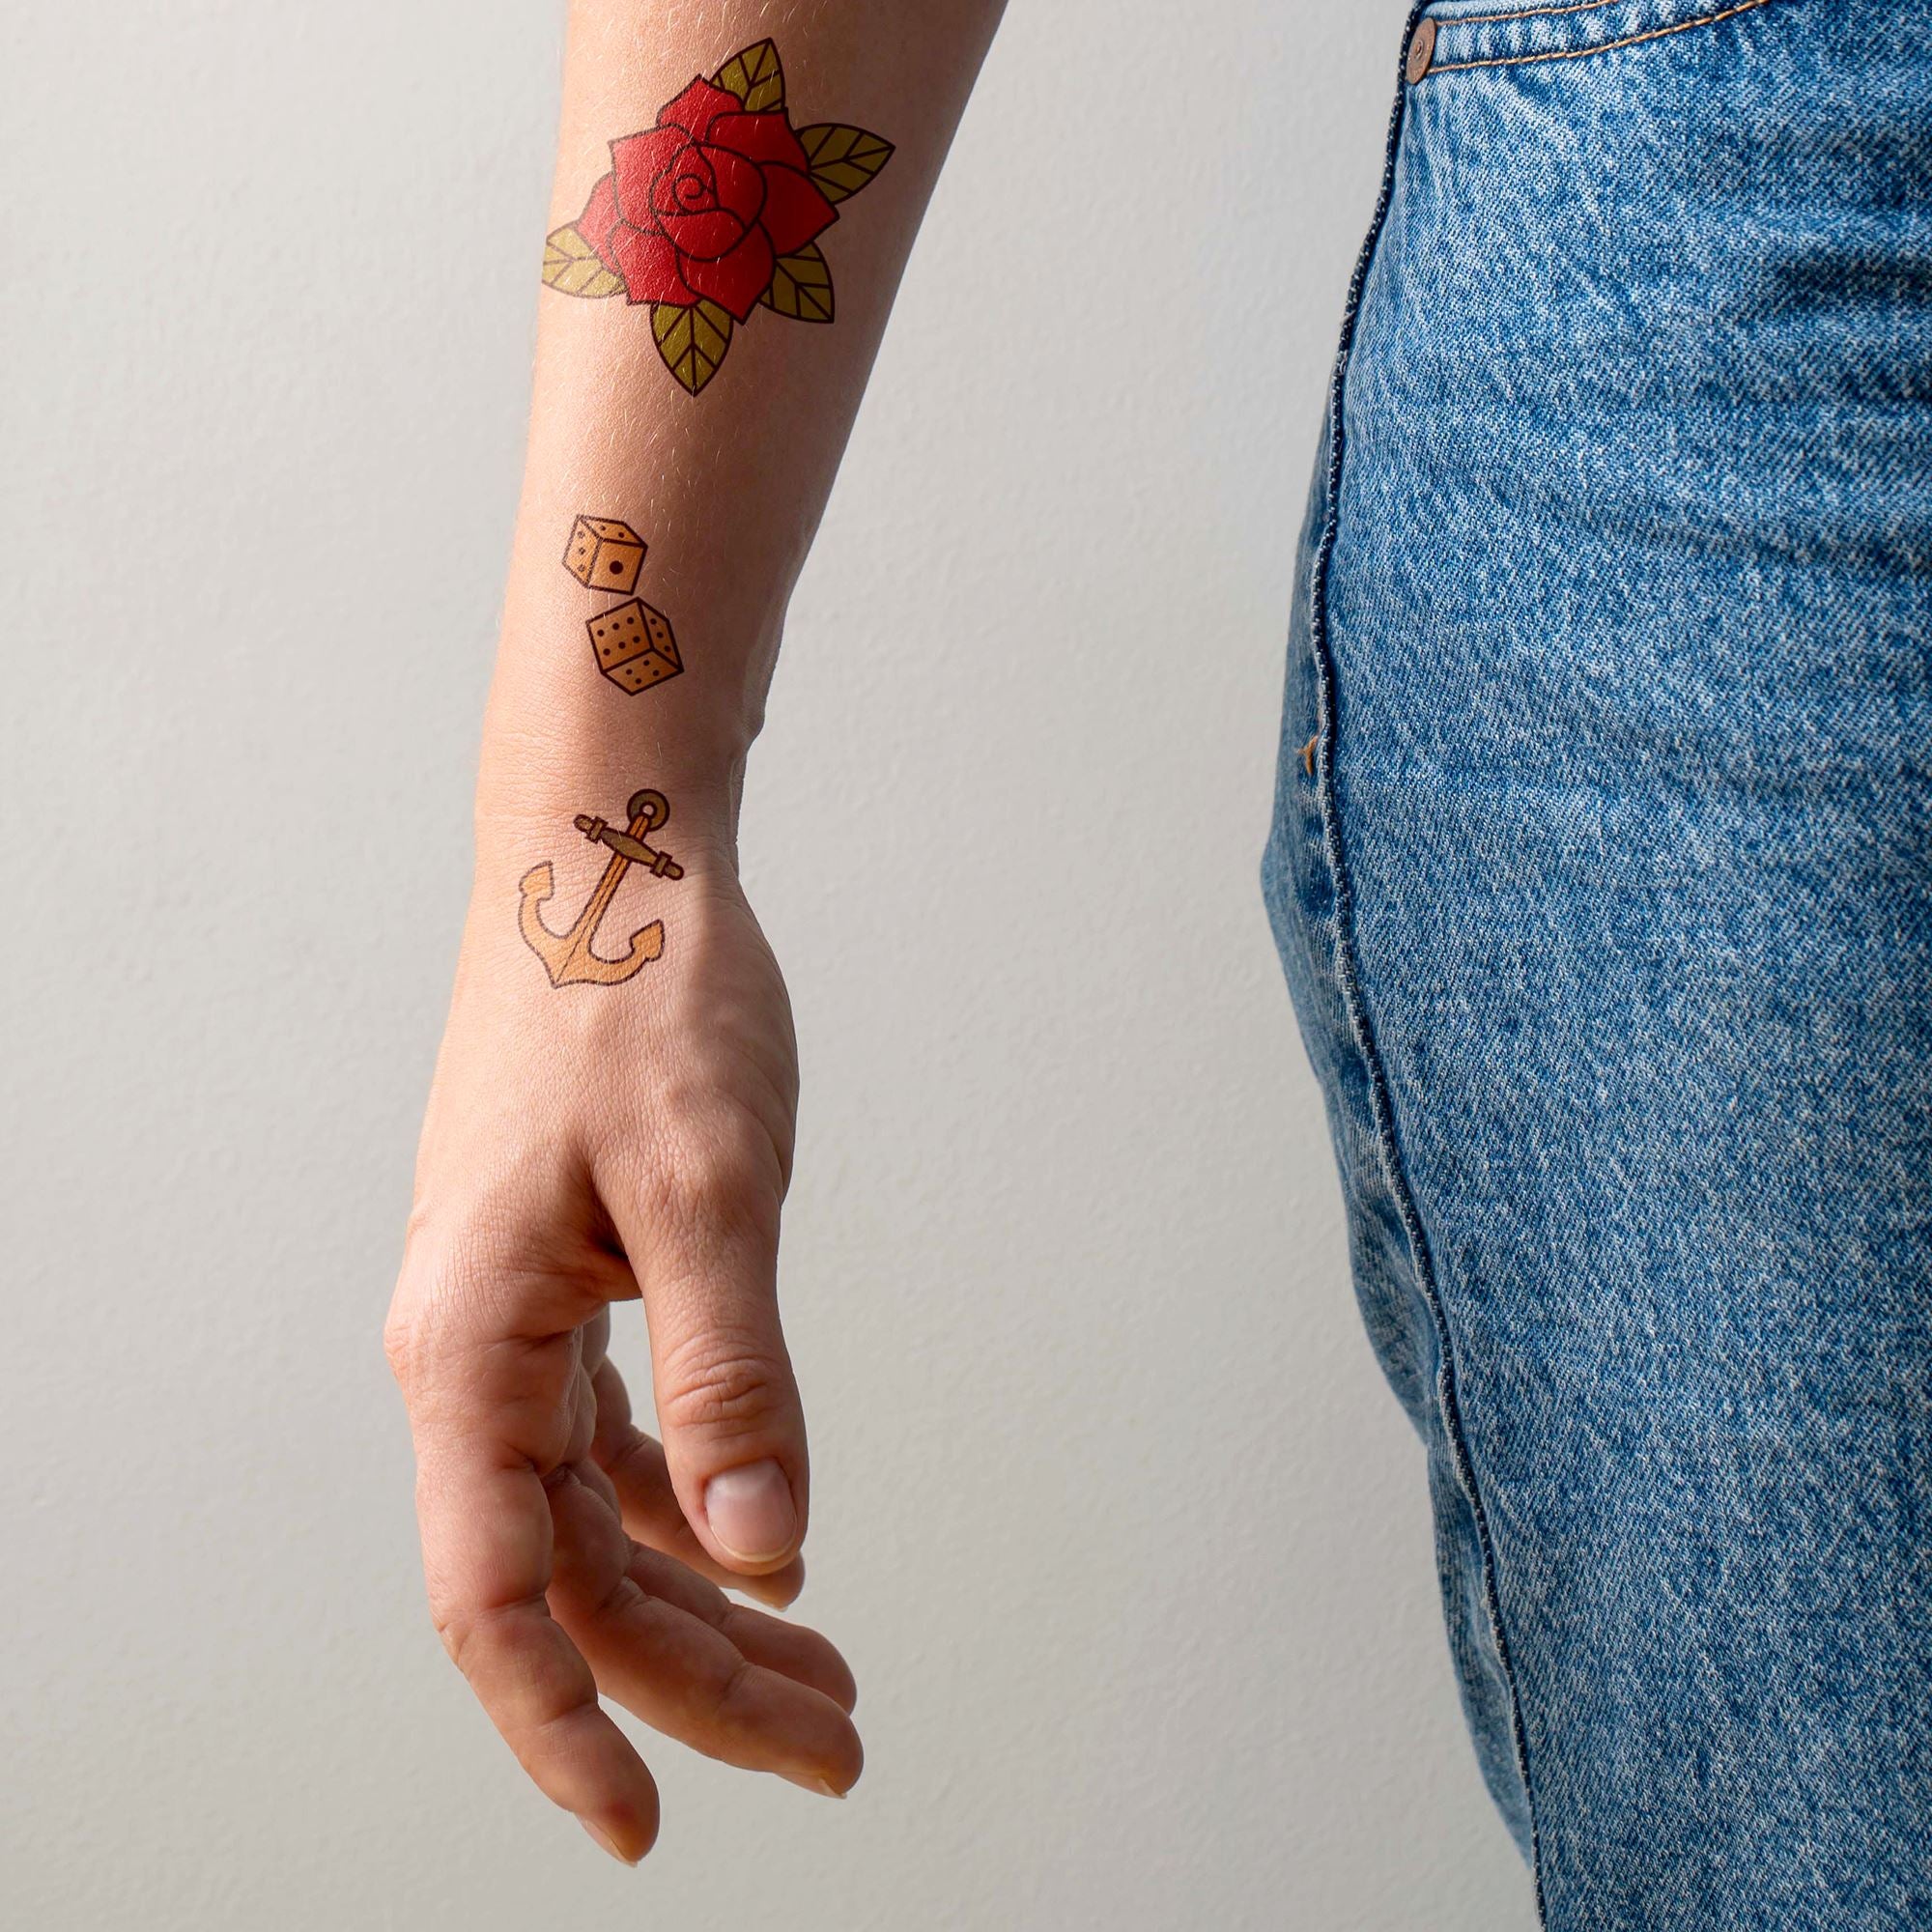 DIY Printable Tattoos | busy mockingbird